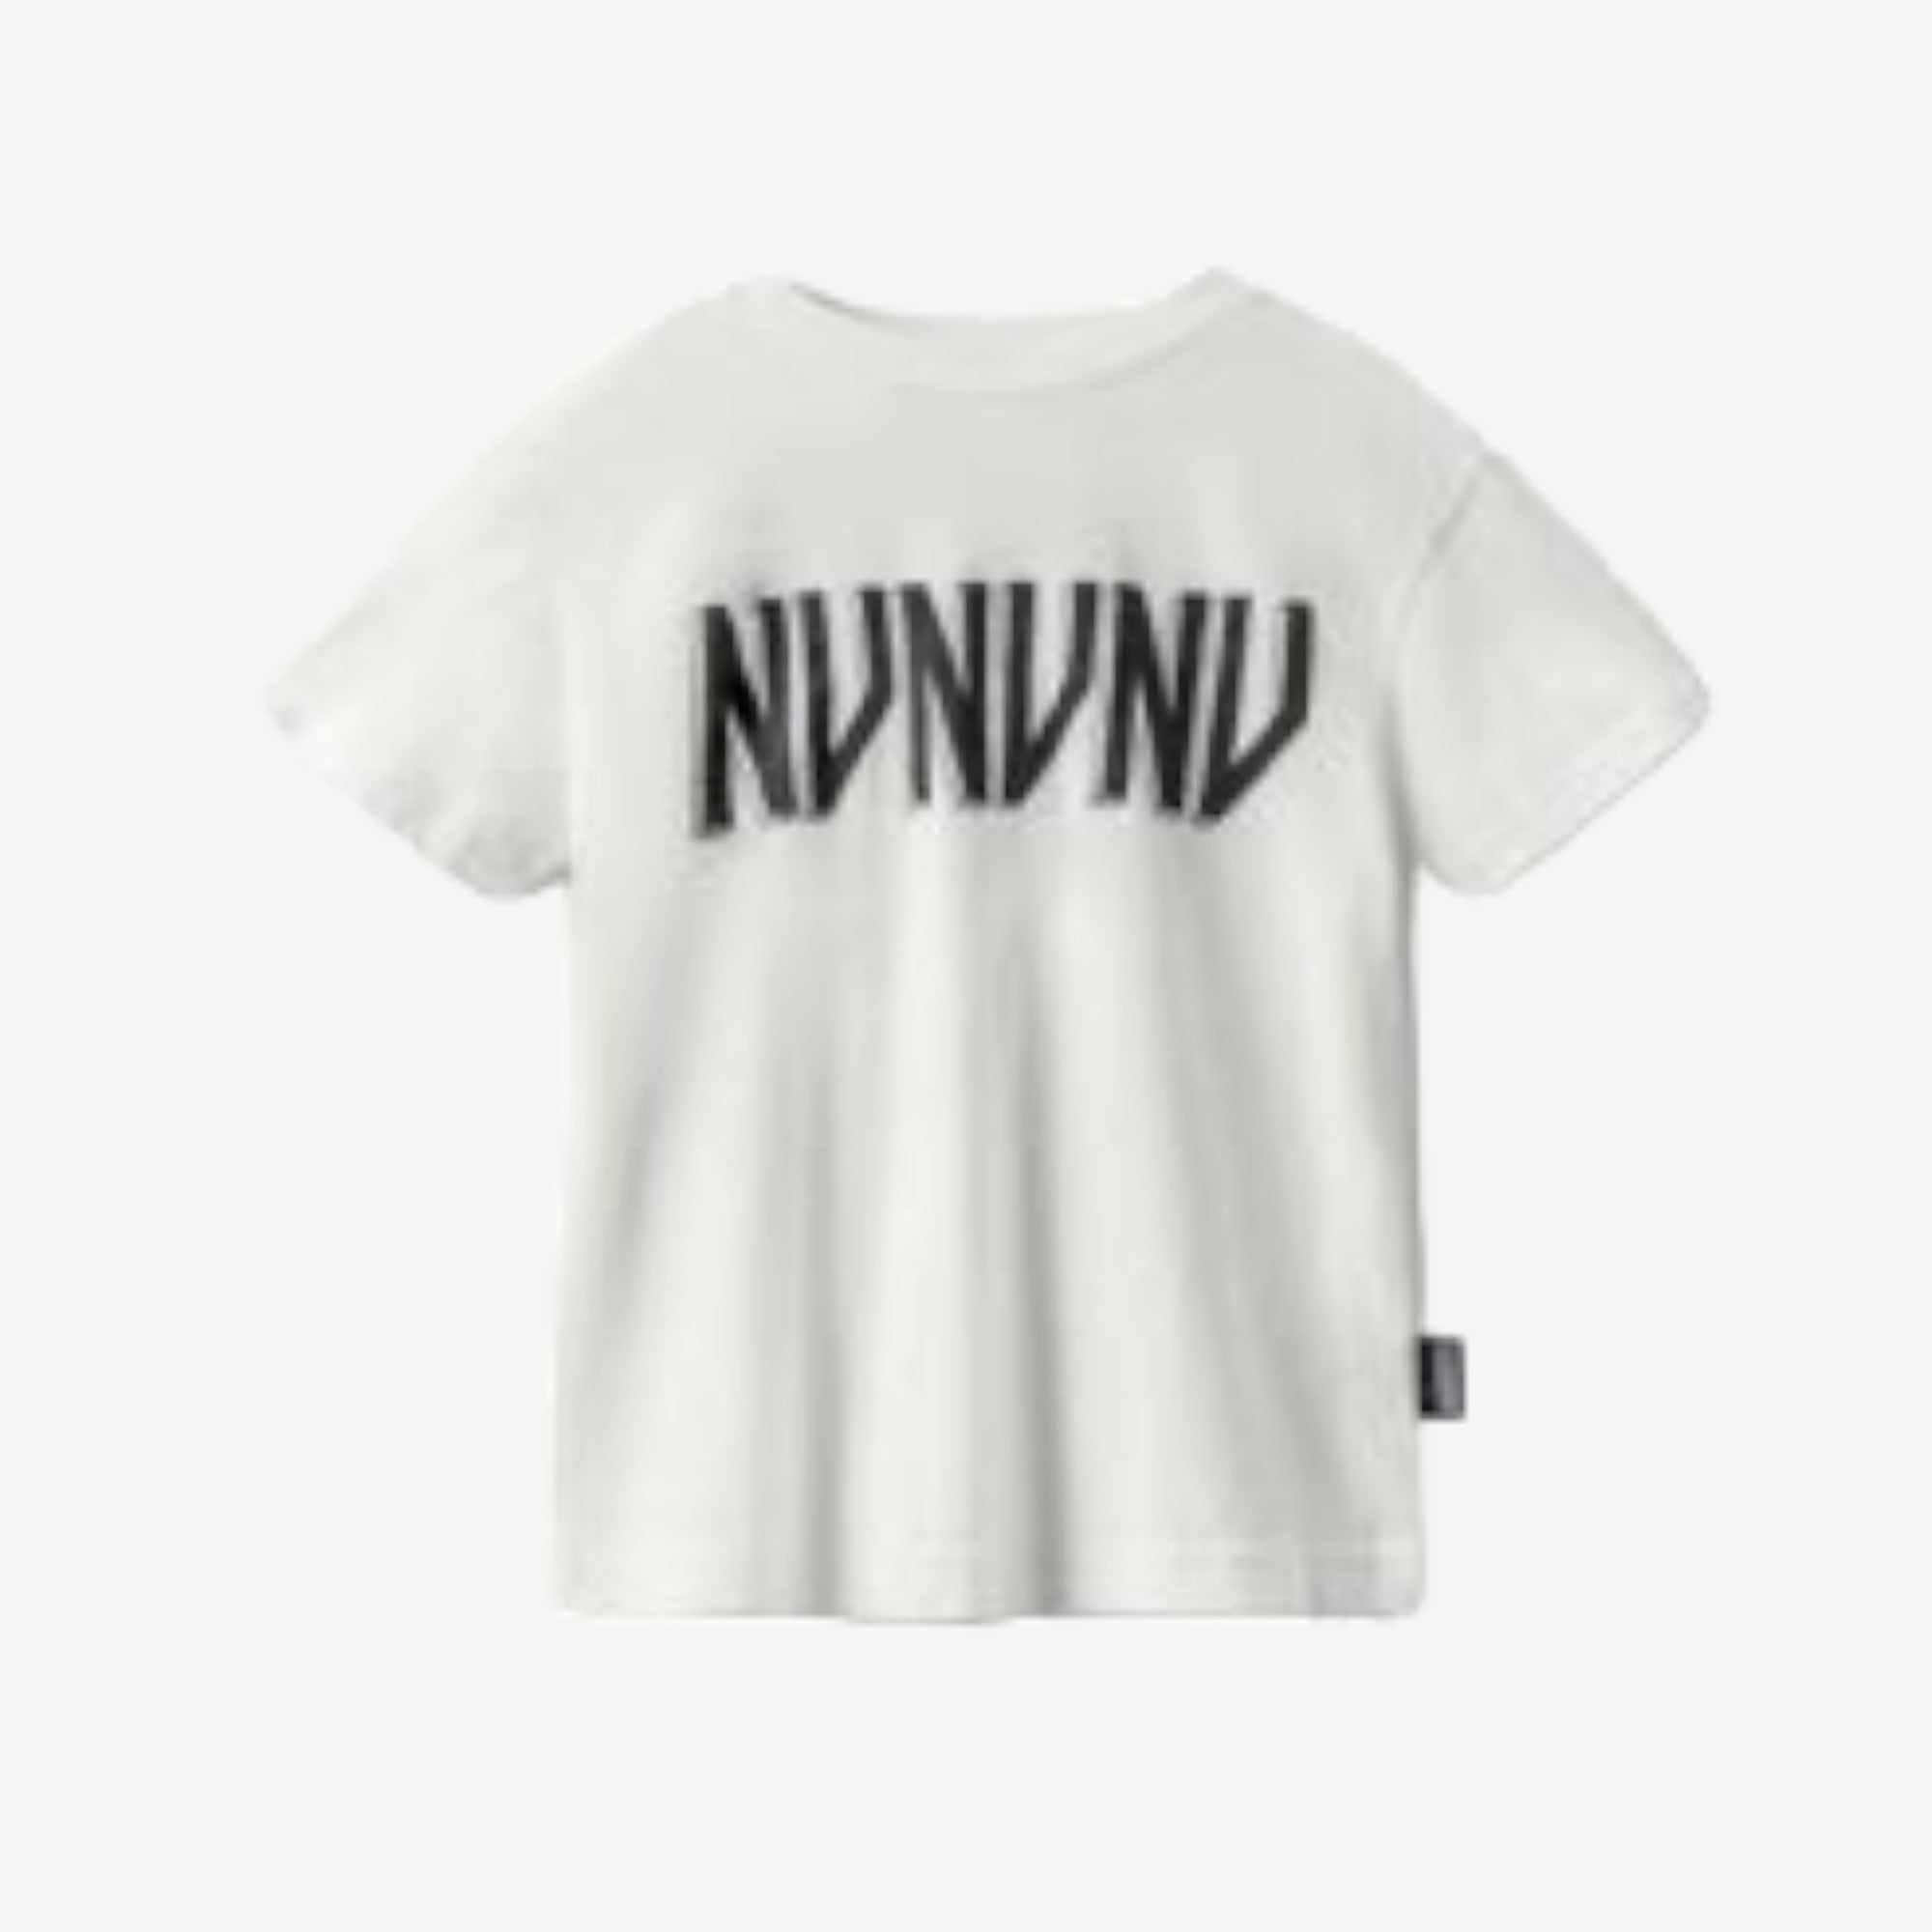 Nununu Letters T-Shirt - White